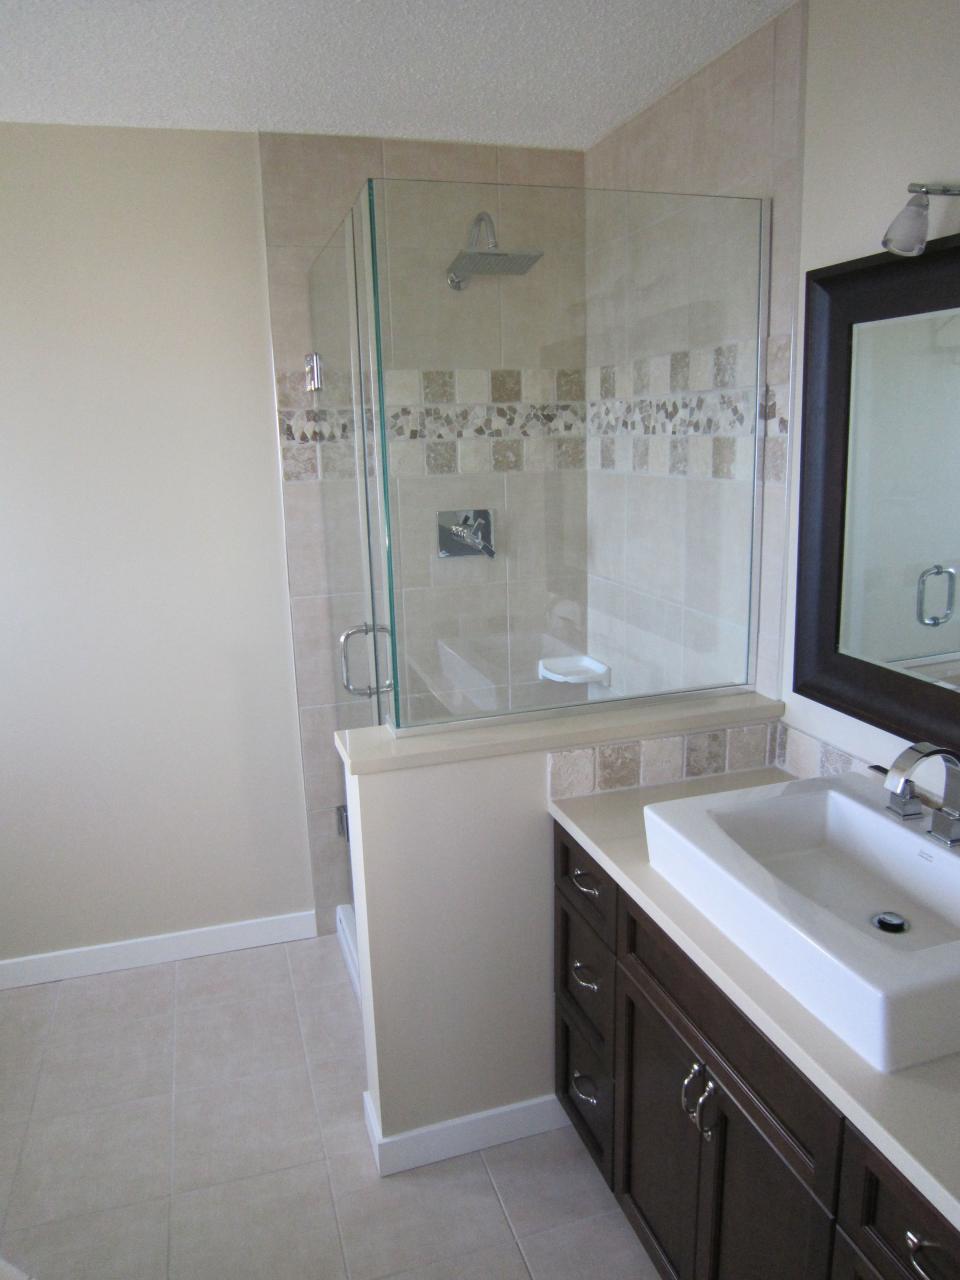 Woodbine Bathroom Tile shower bathroom renovation via www